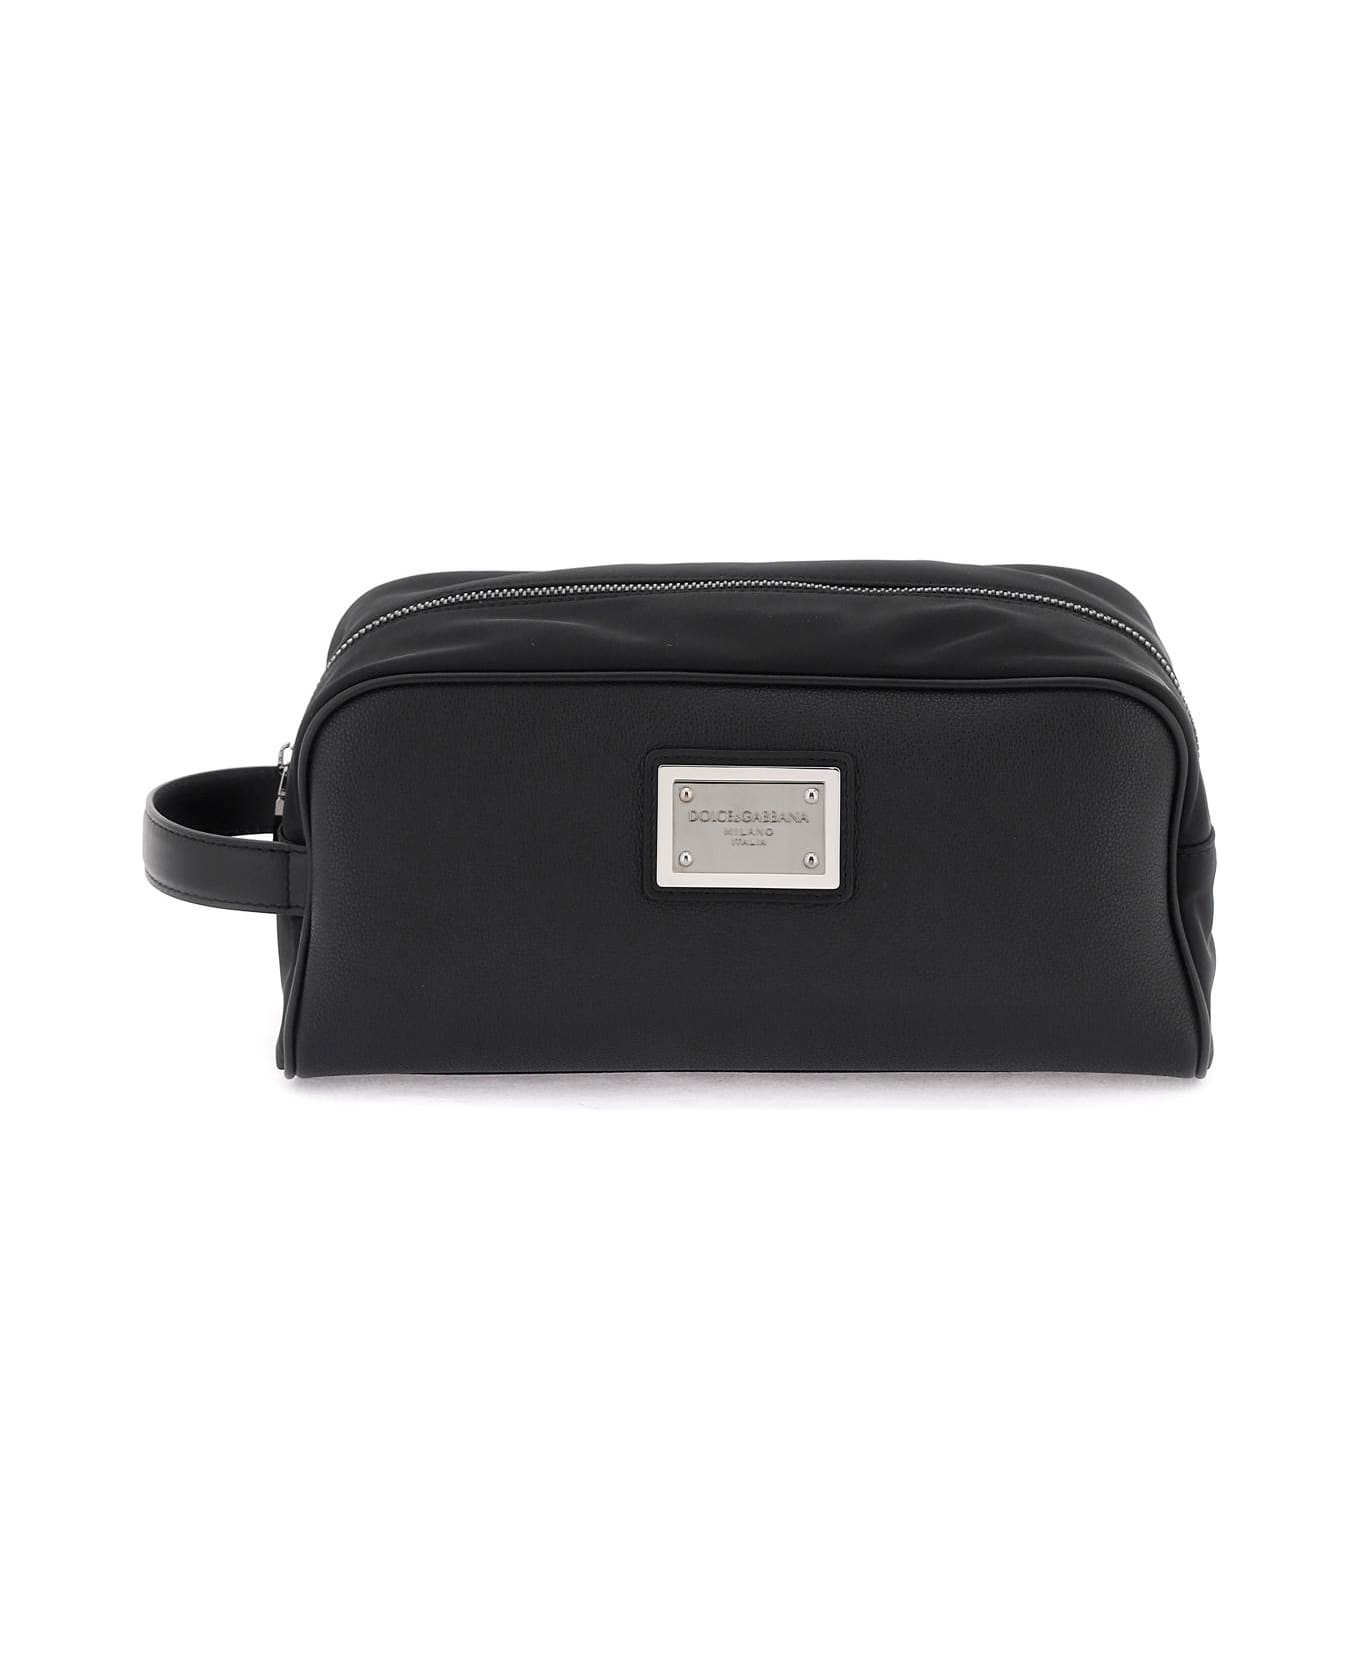 Dolce & Gabbana Leather And Nylon Vanity Case - black